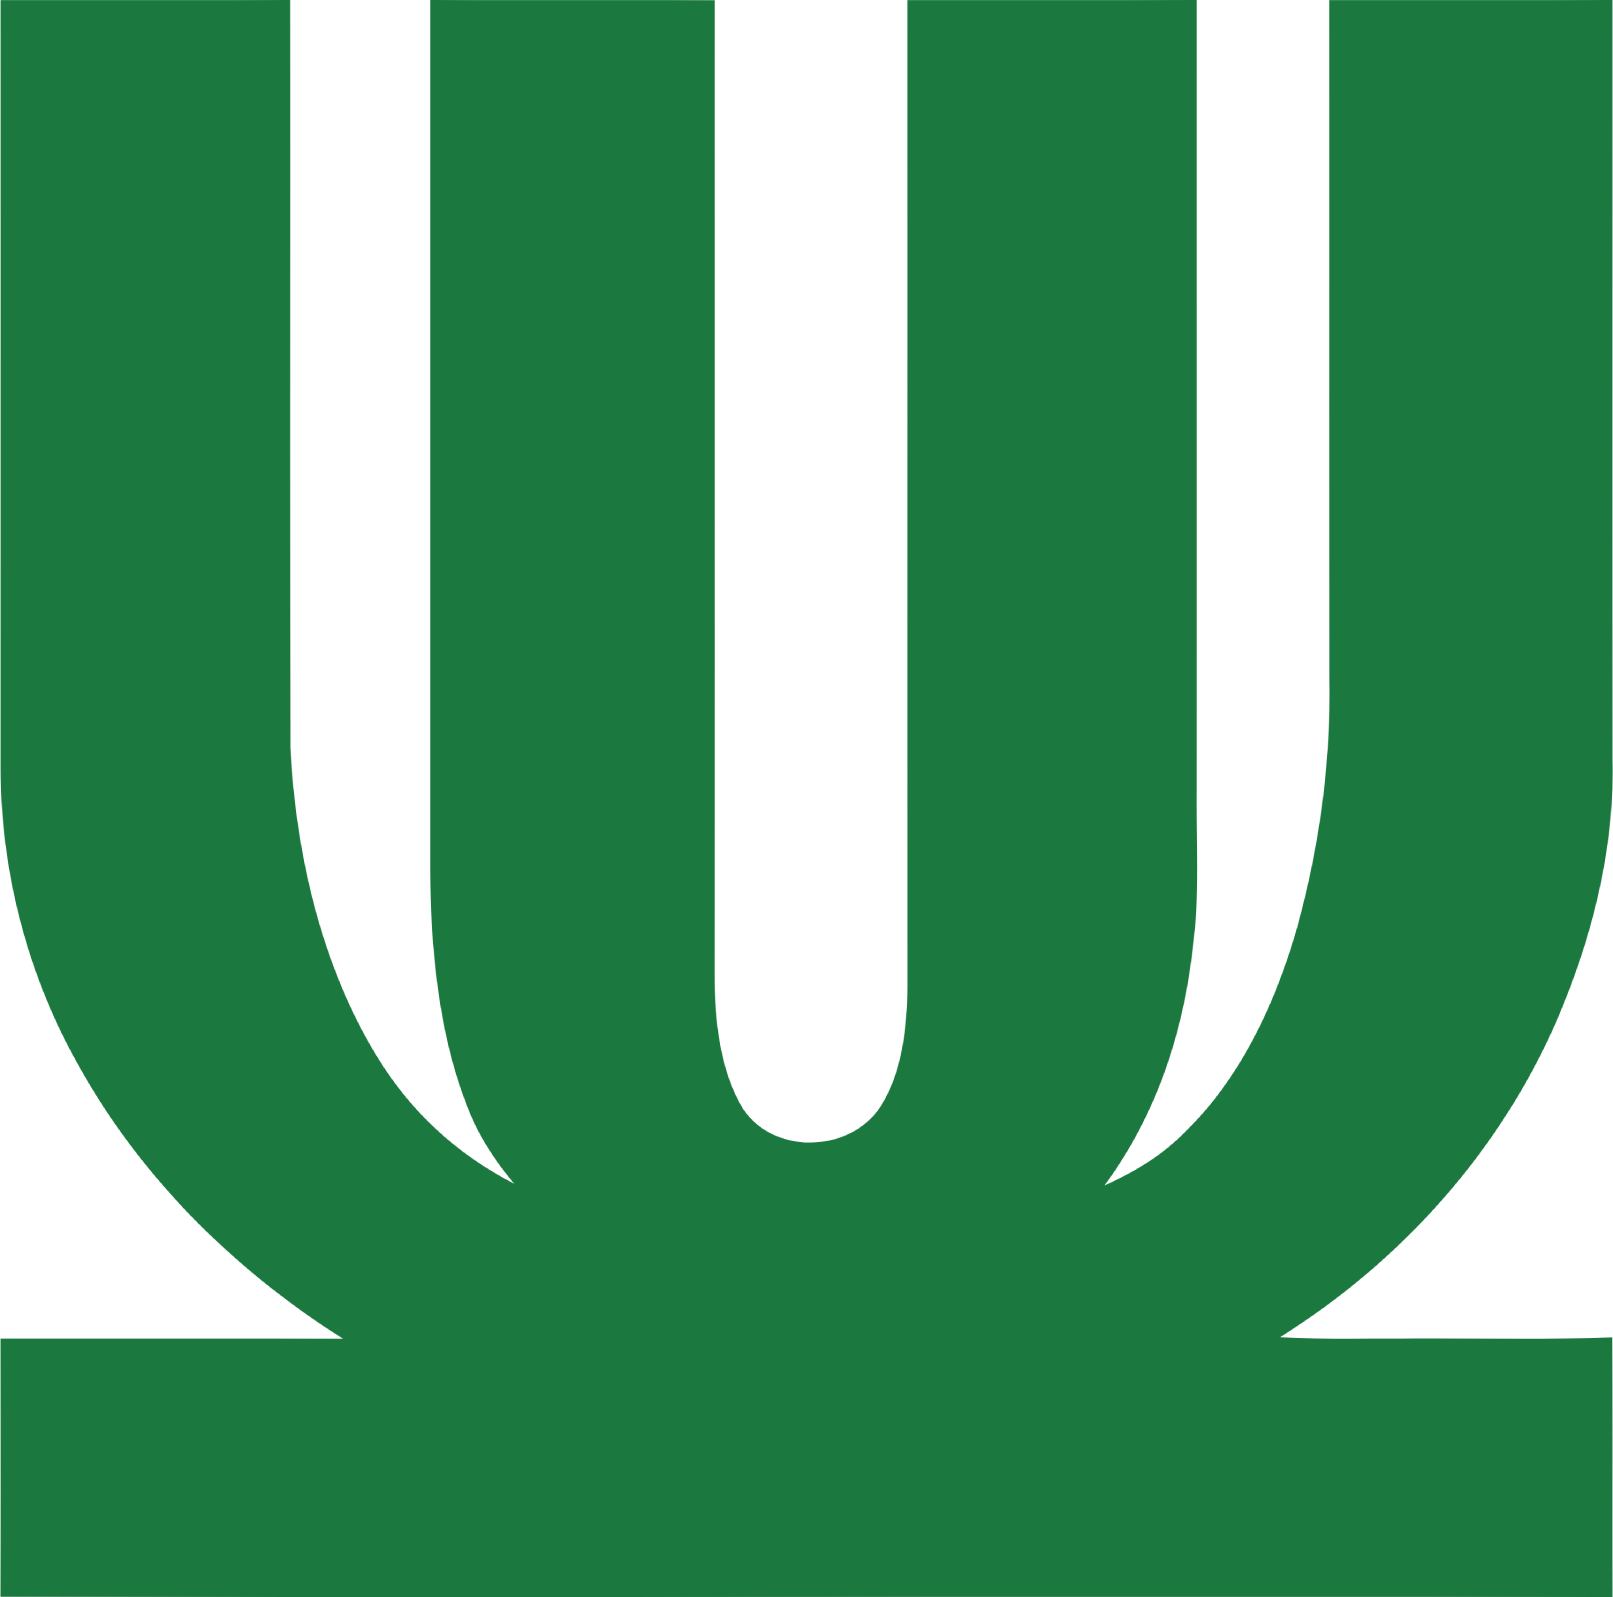 UOL Group logo (transparent PNG)